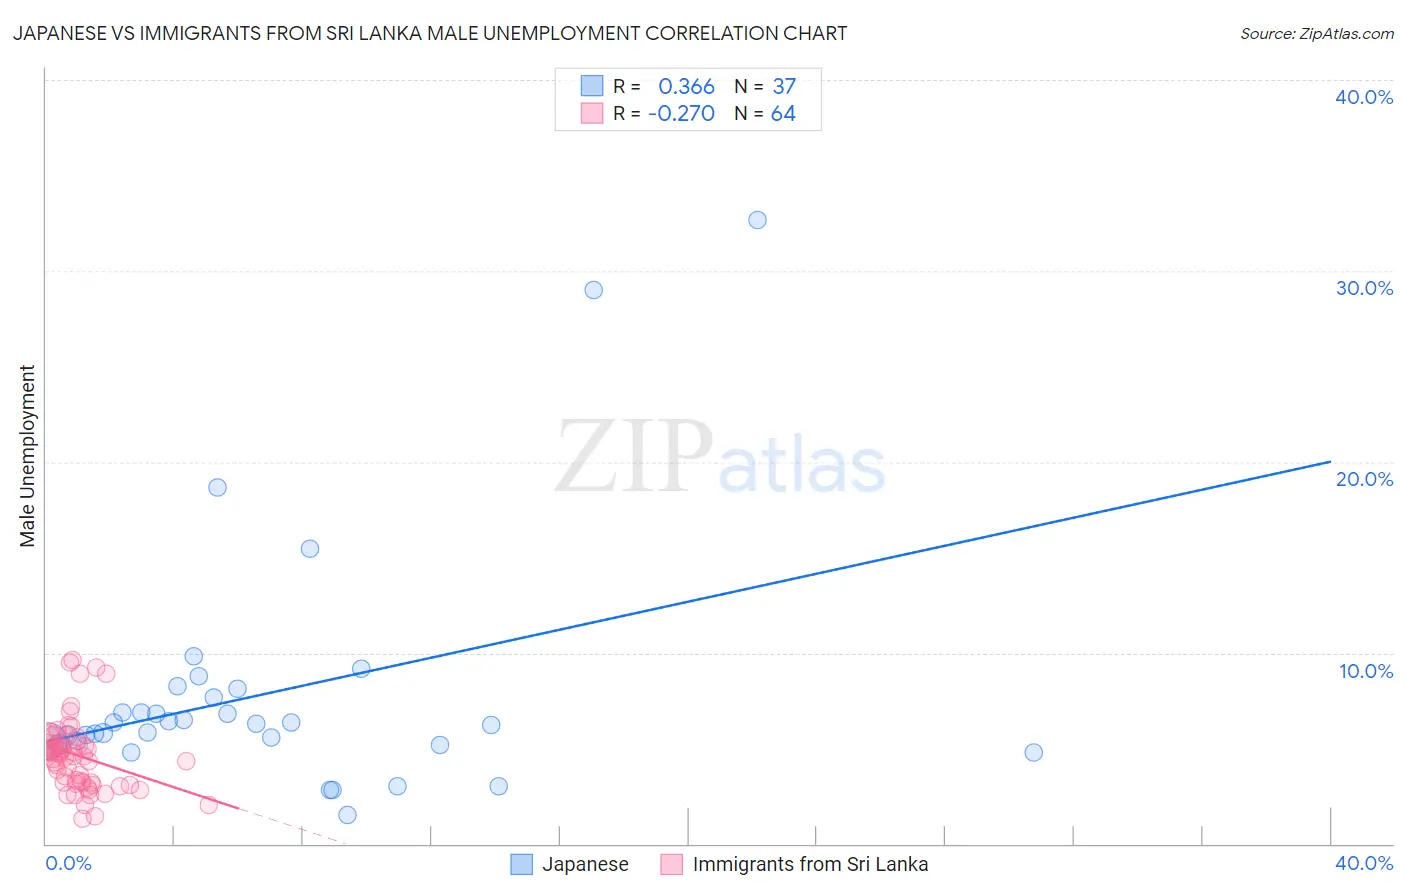 Japanese vs Immigrants from Sri Lanka Male Unemployment